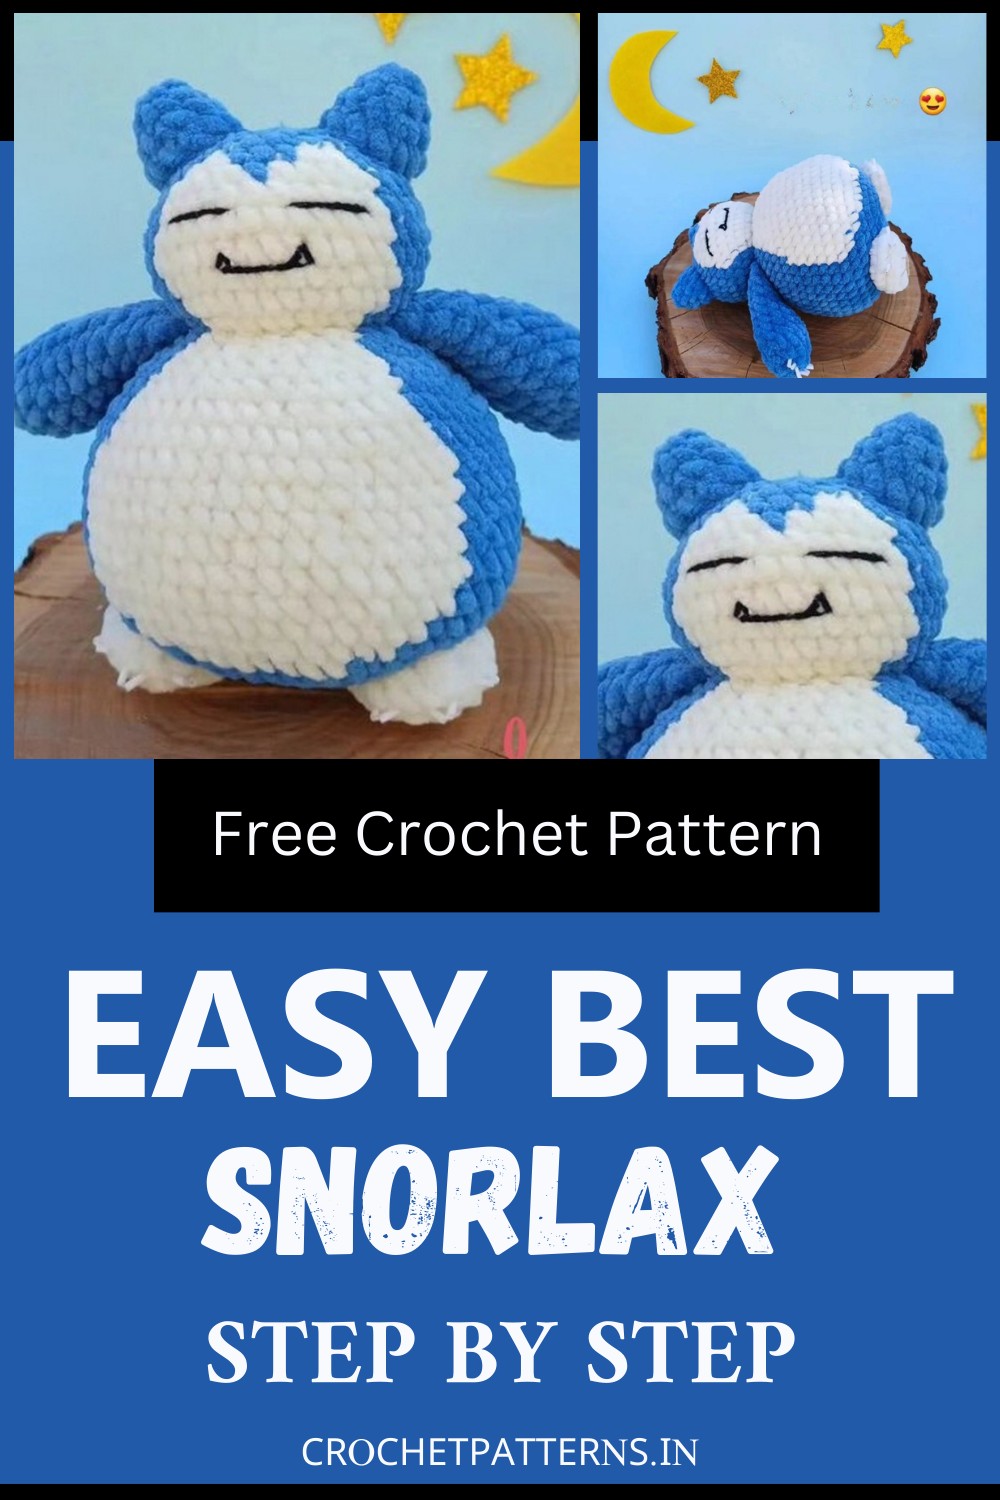 Free Crochet Snorlax Pattern